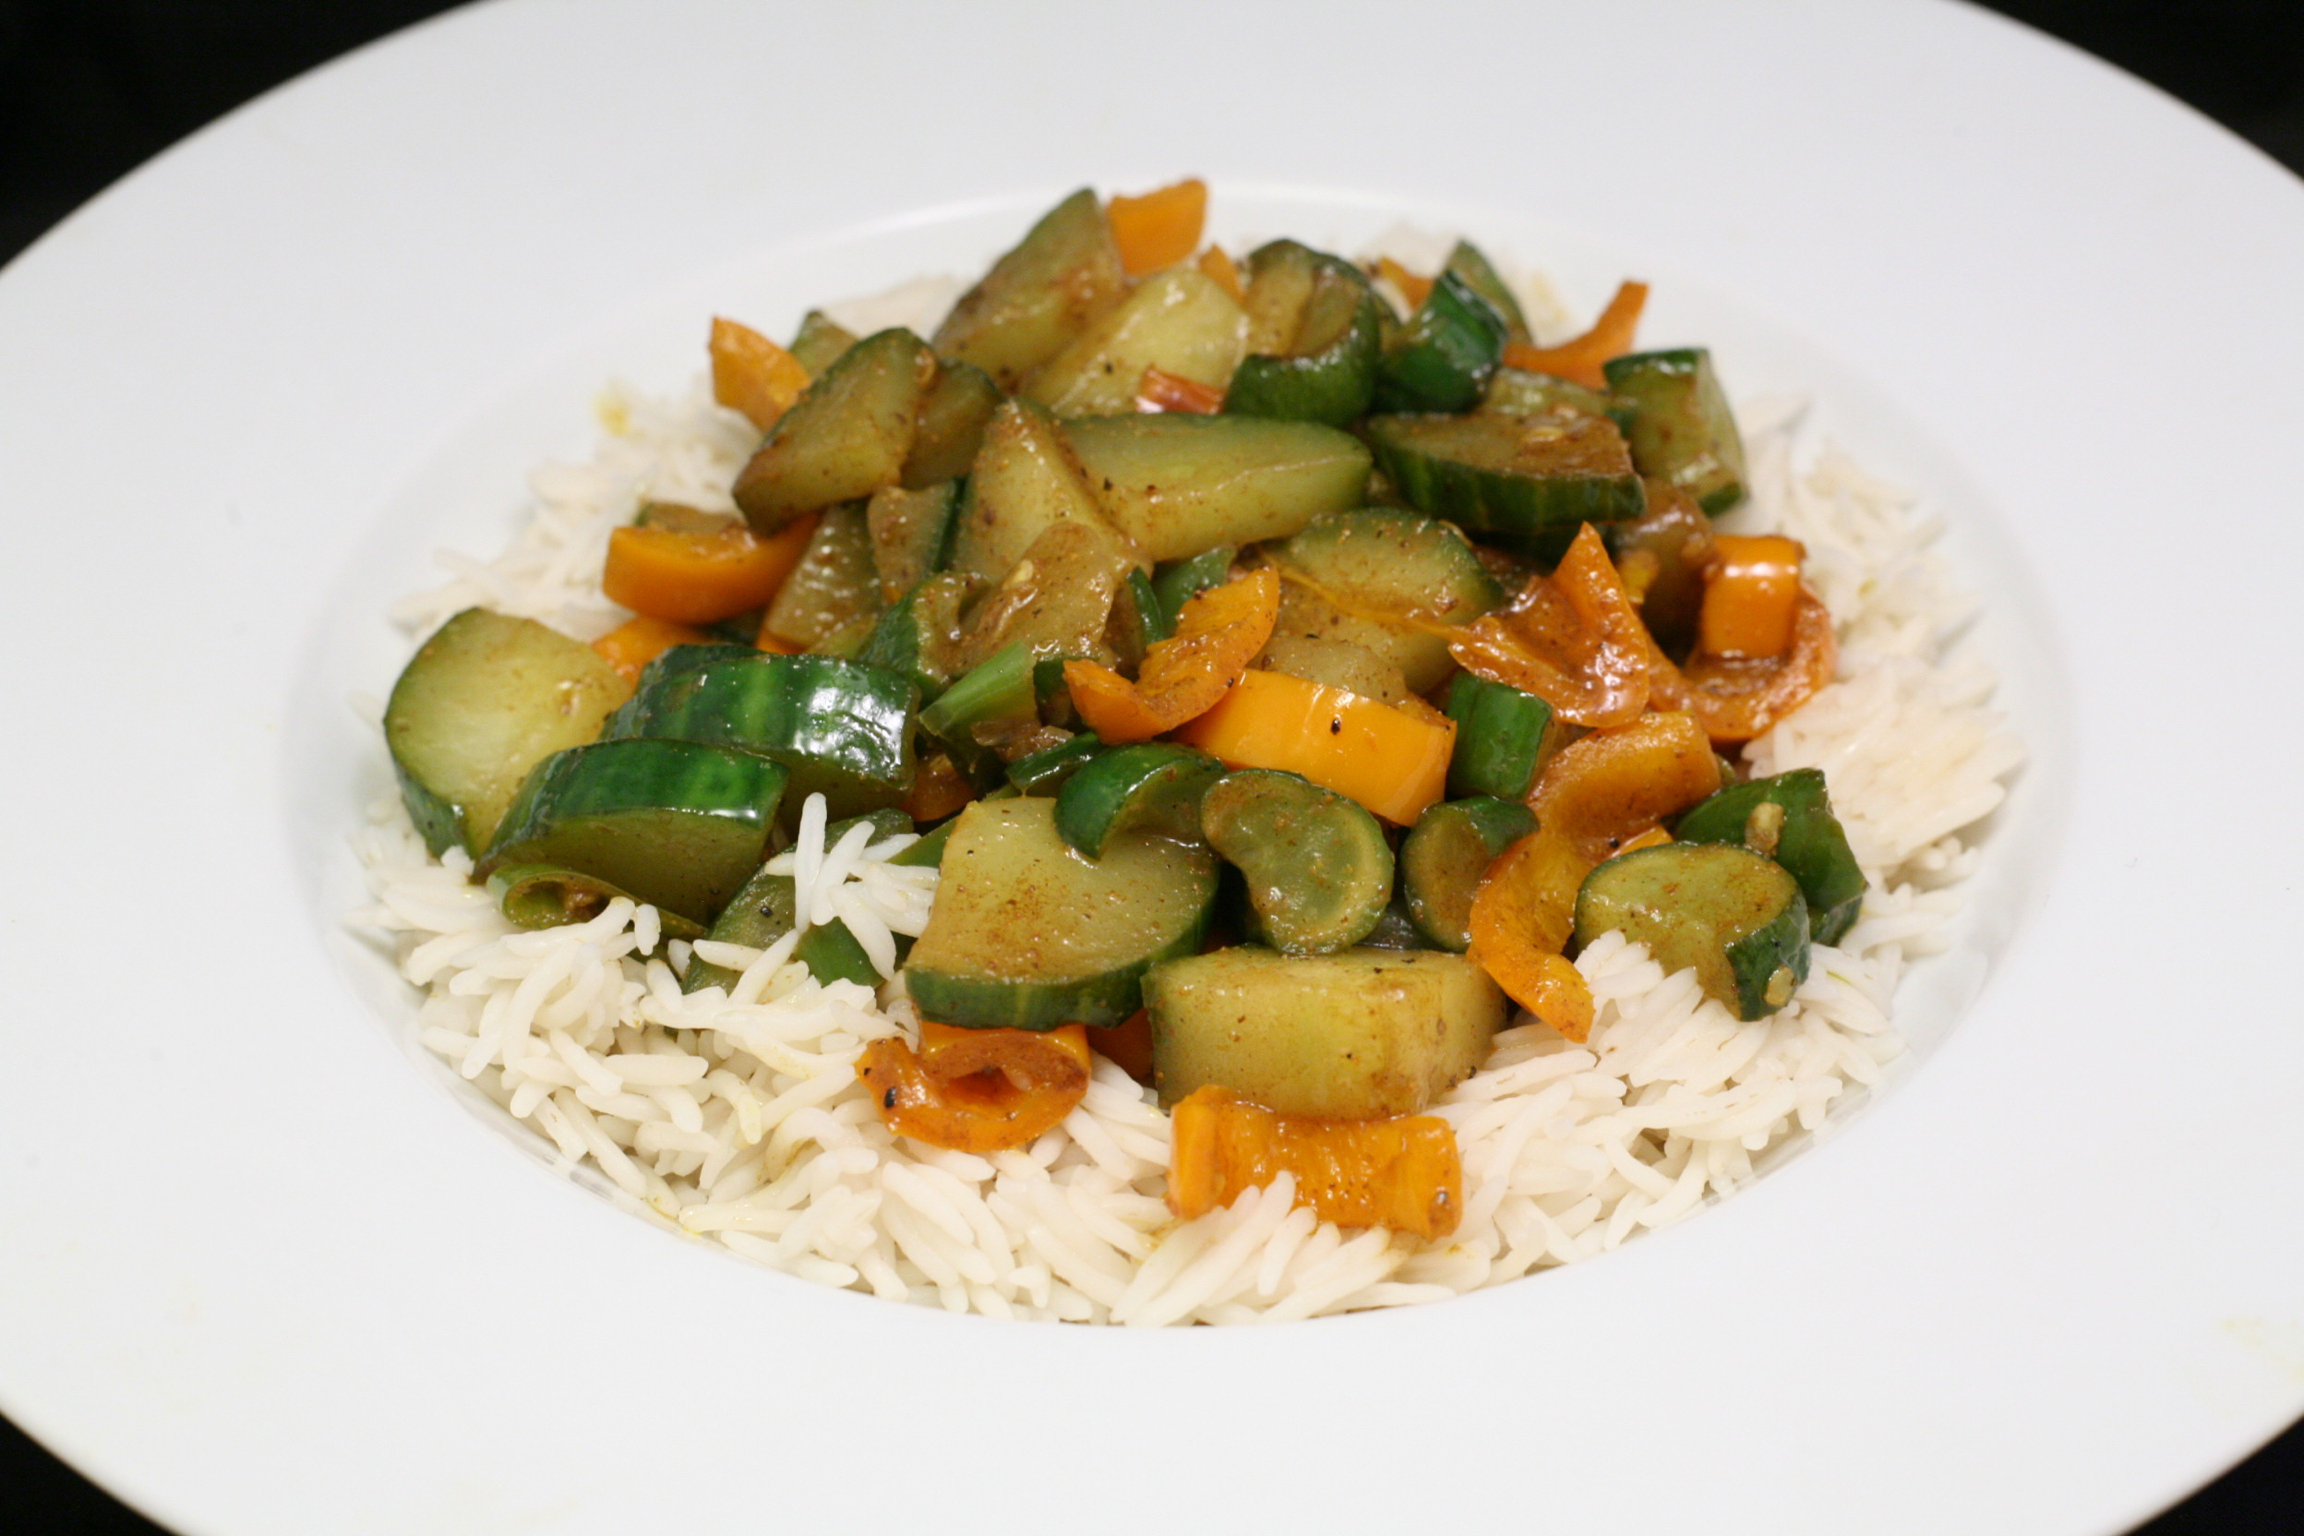 Gemüse mit Basmati-Reis